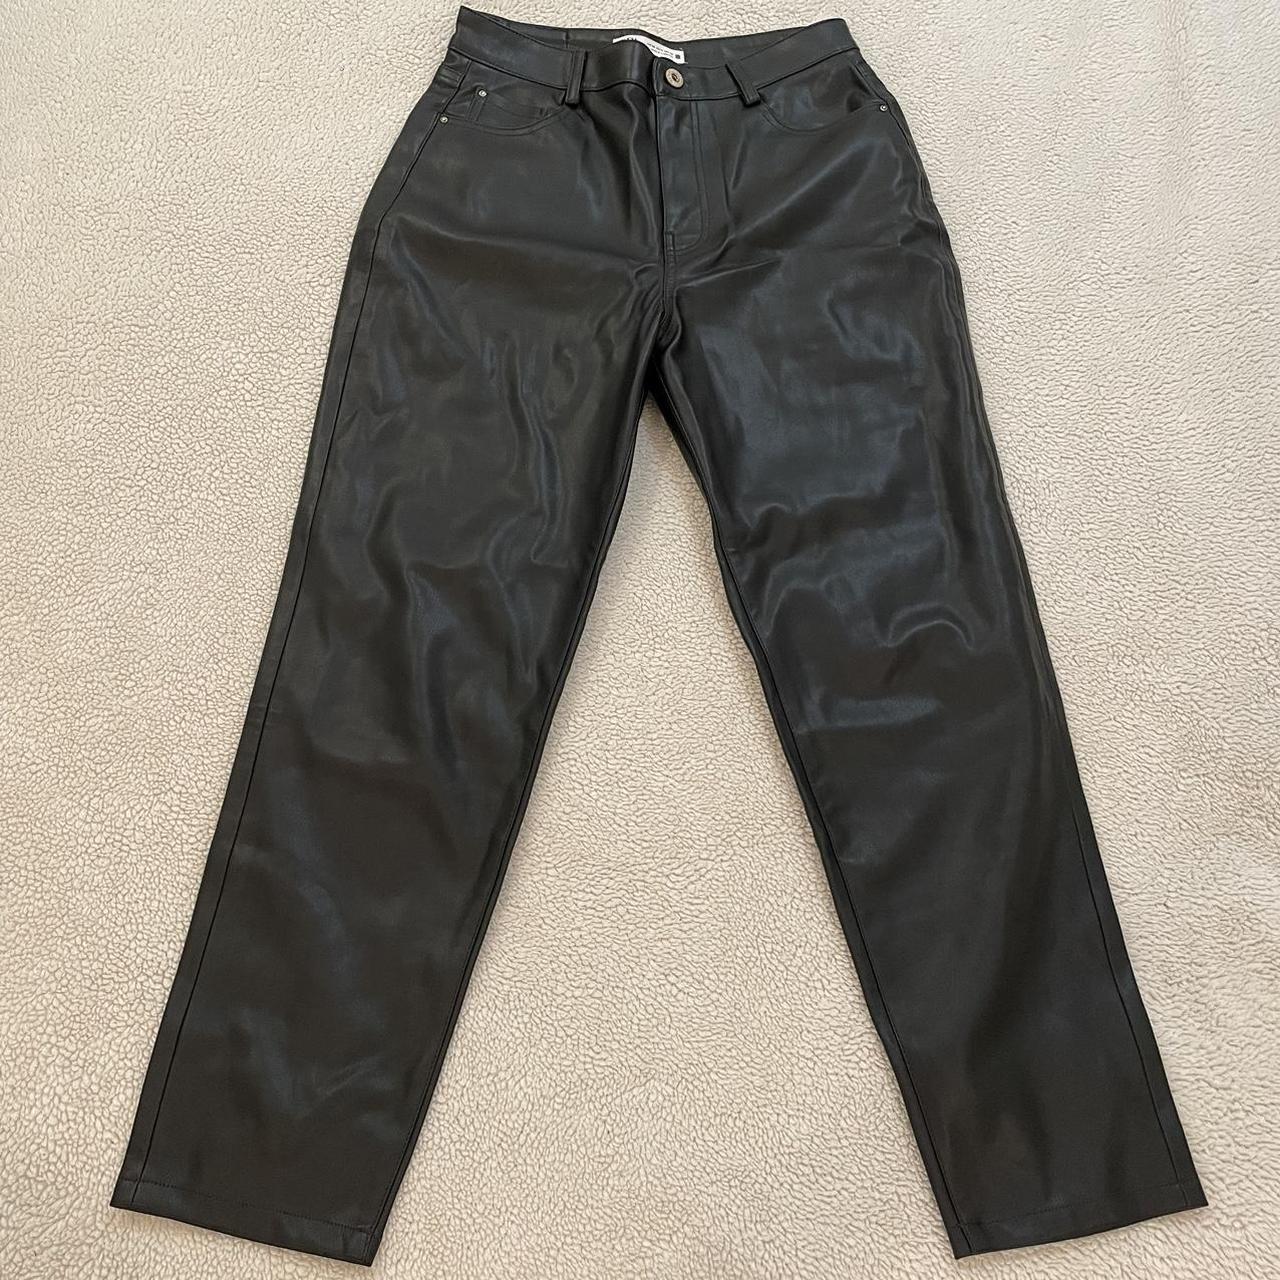 Mens PU Leather Pants Tide Fashion Black Long Boys Street Joggers Trousers  2020 | eBay